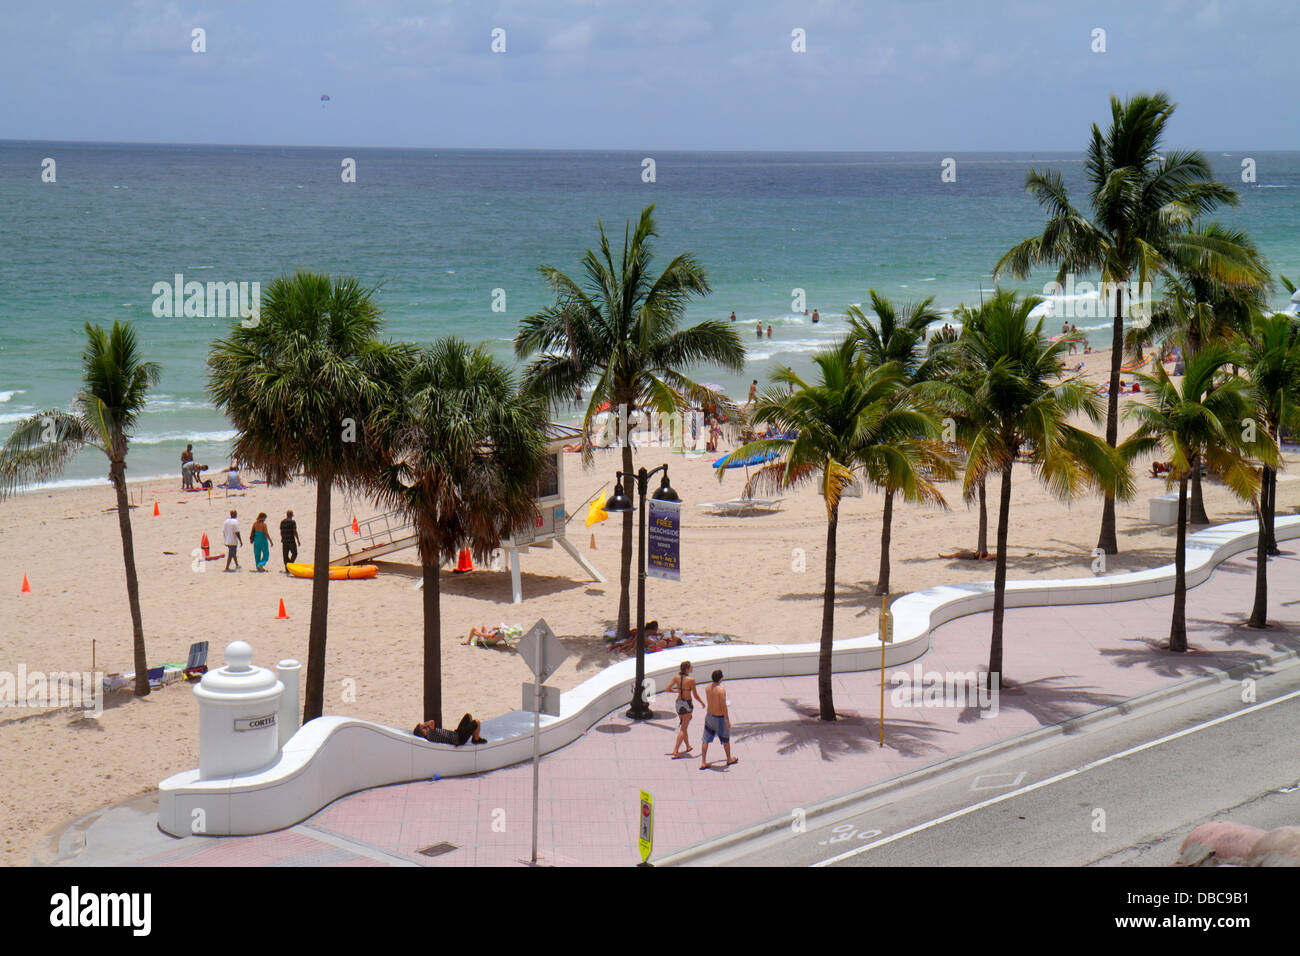 Fort Ft. Lauderdale Florida, South Fort Lauderdale Beach Boulevard, A1A, Sonnenanbeter, Atlantischer Ozean, Sand, Palmen, Ufermauer, Meeresmauer, Blick auf FL130720169 Stockfoto